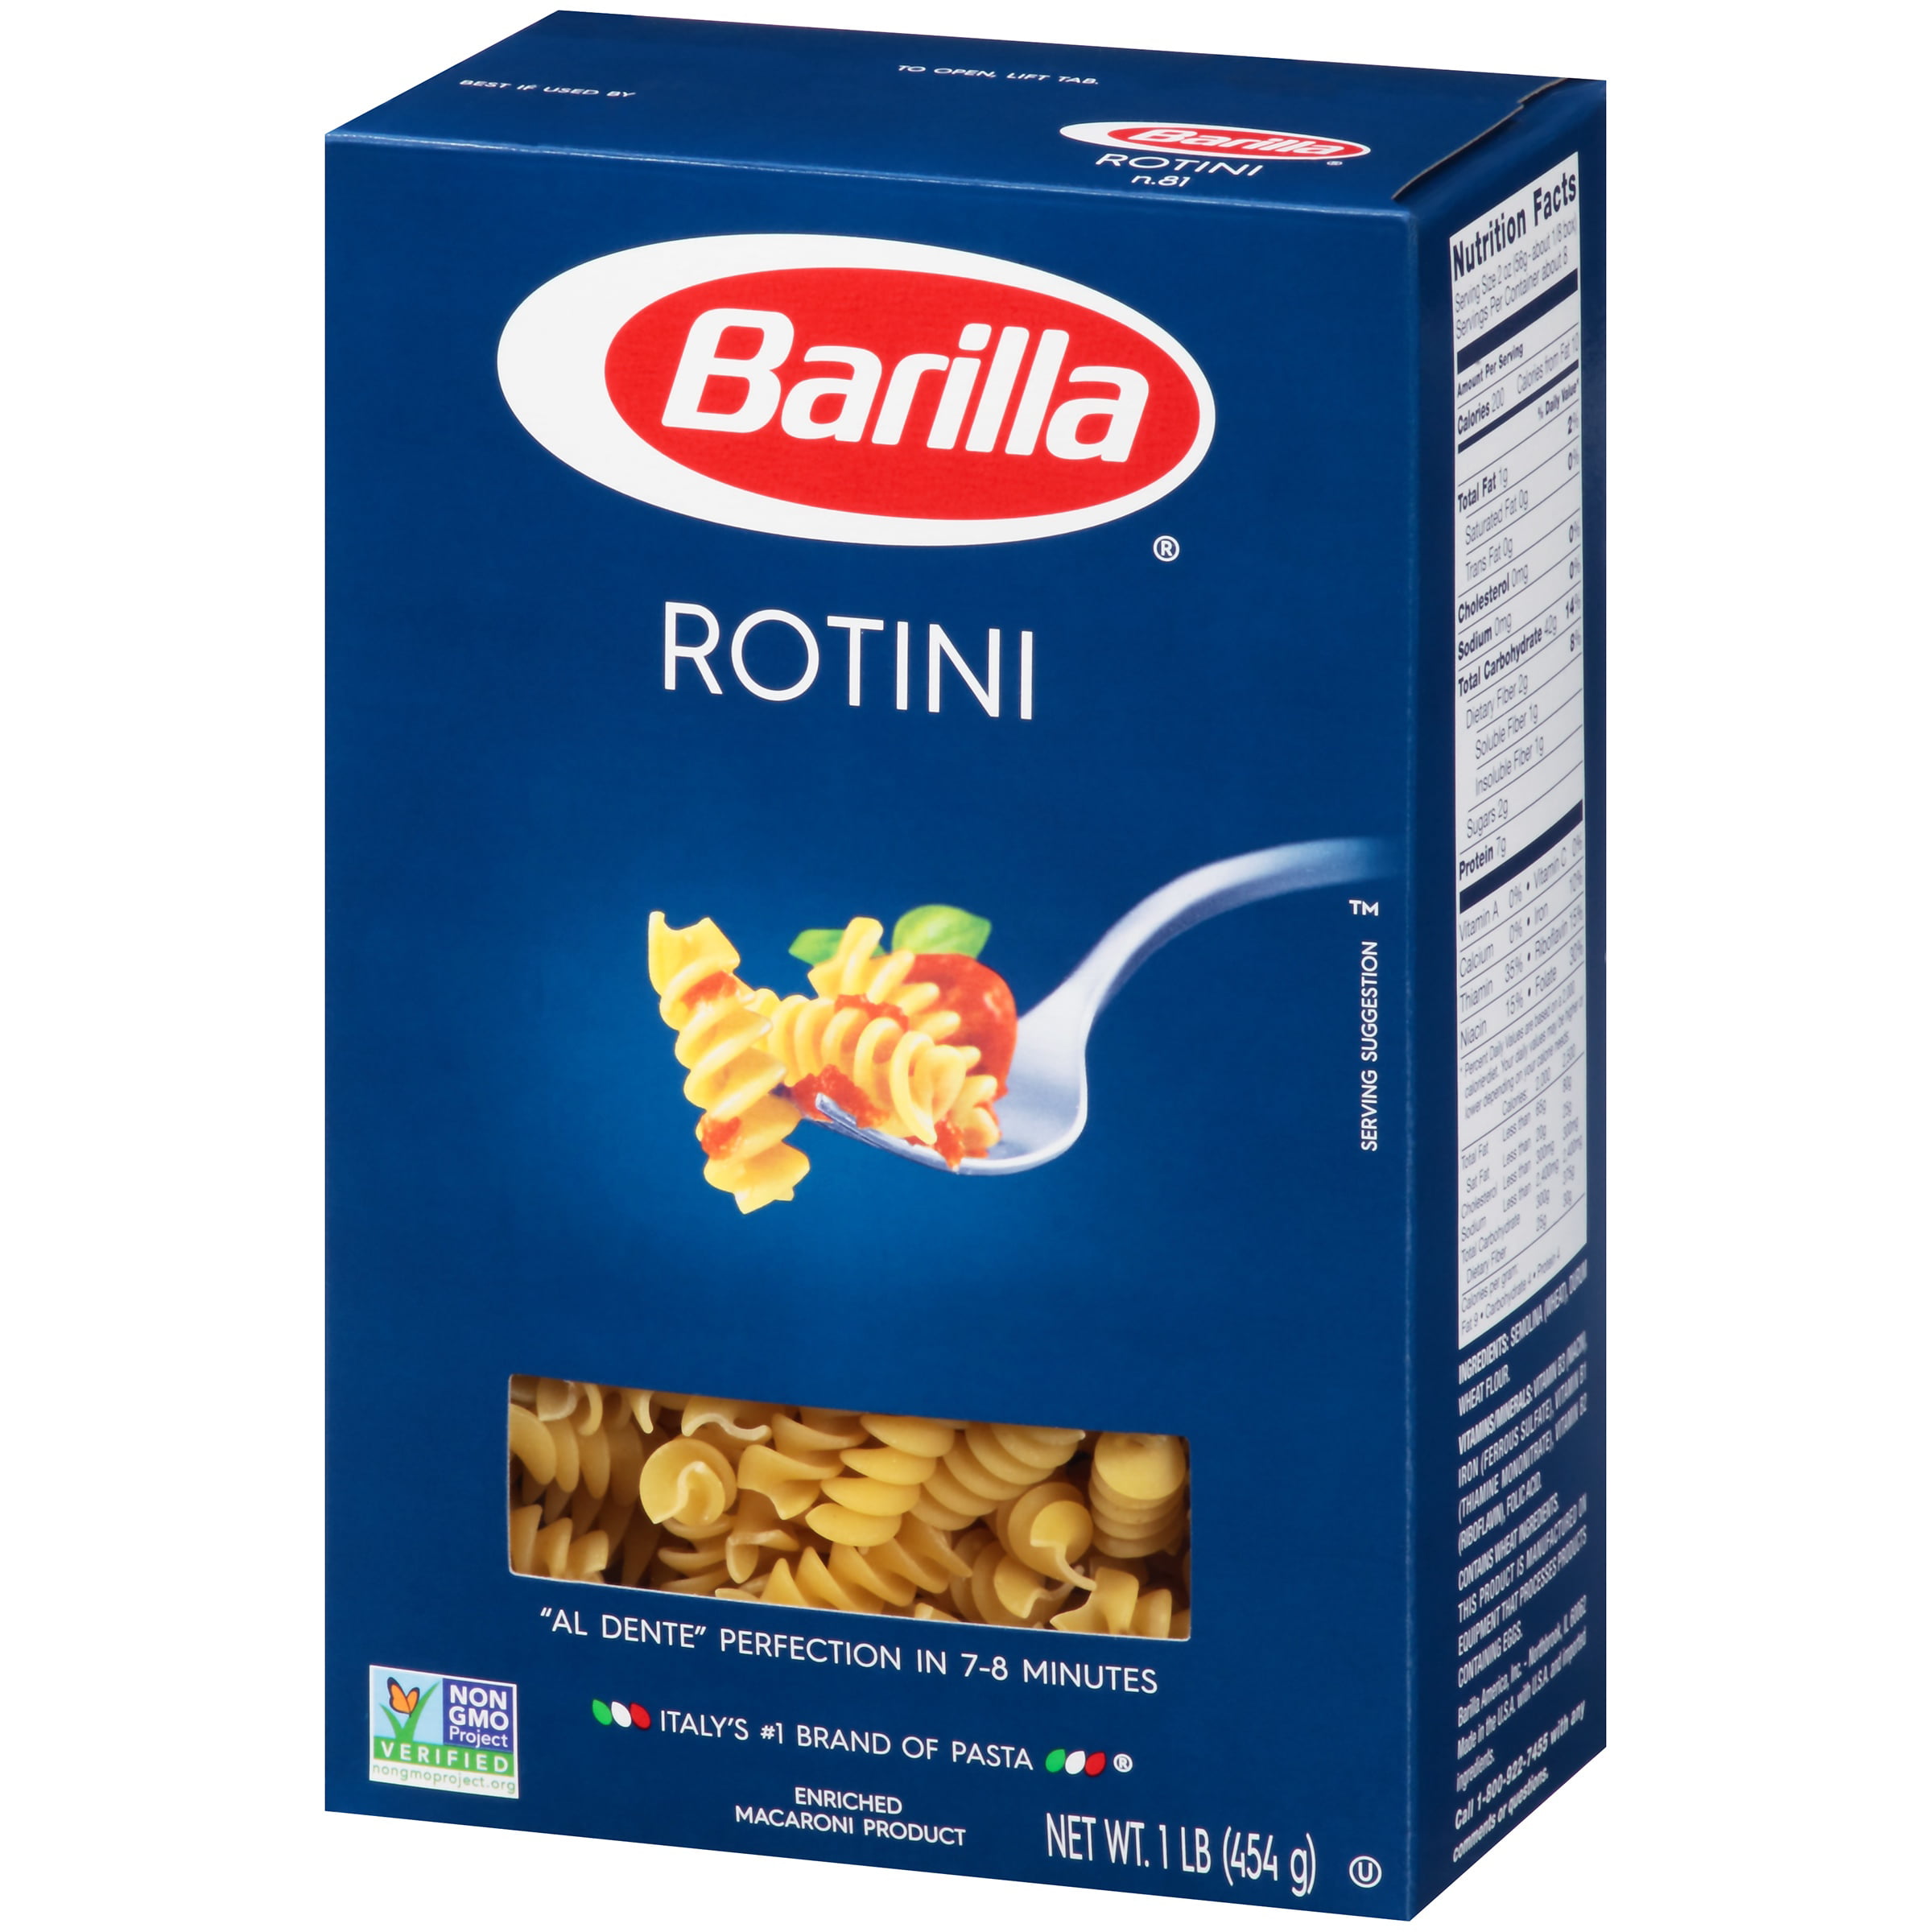 Barilla Rotini